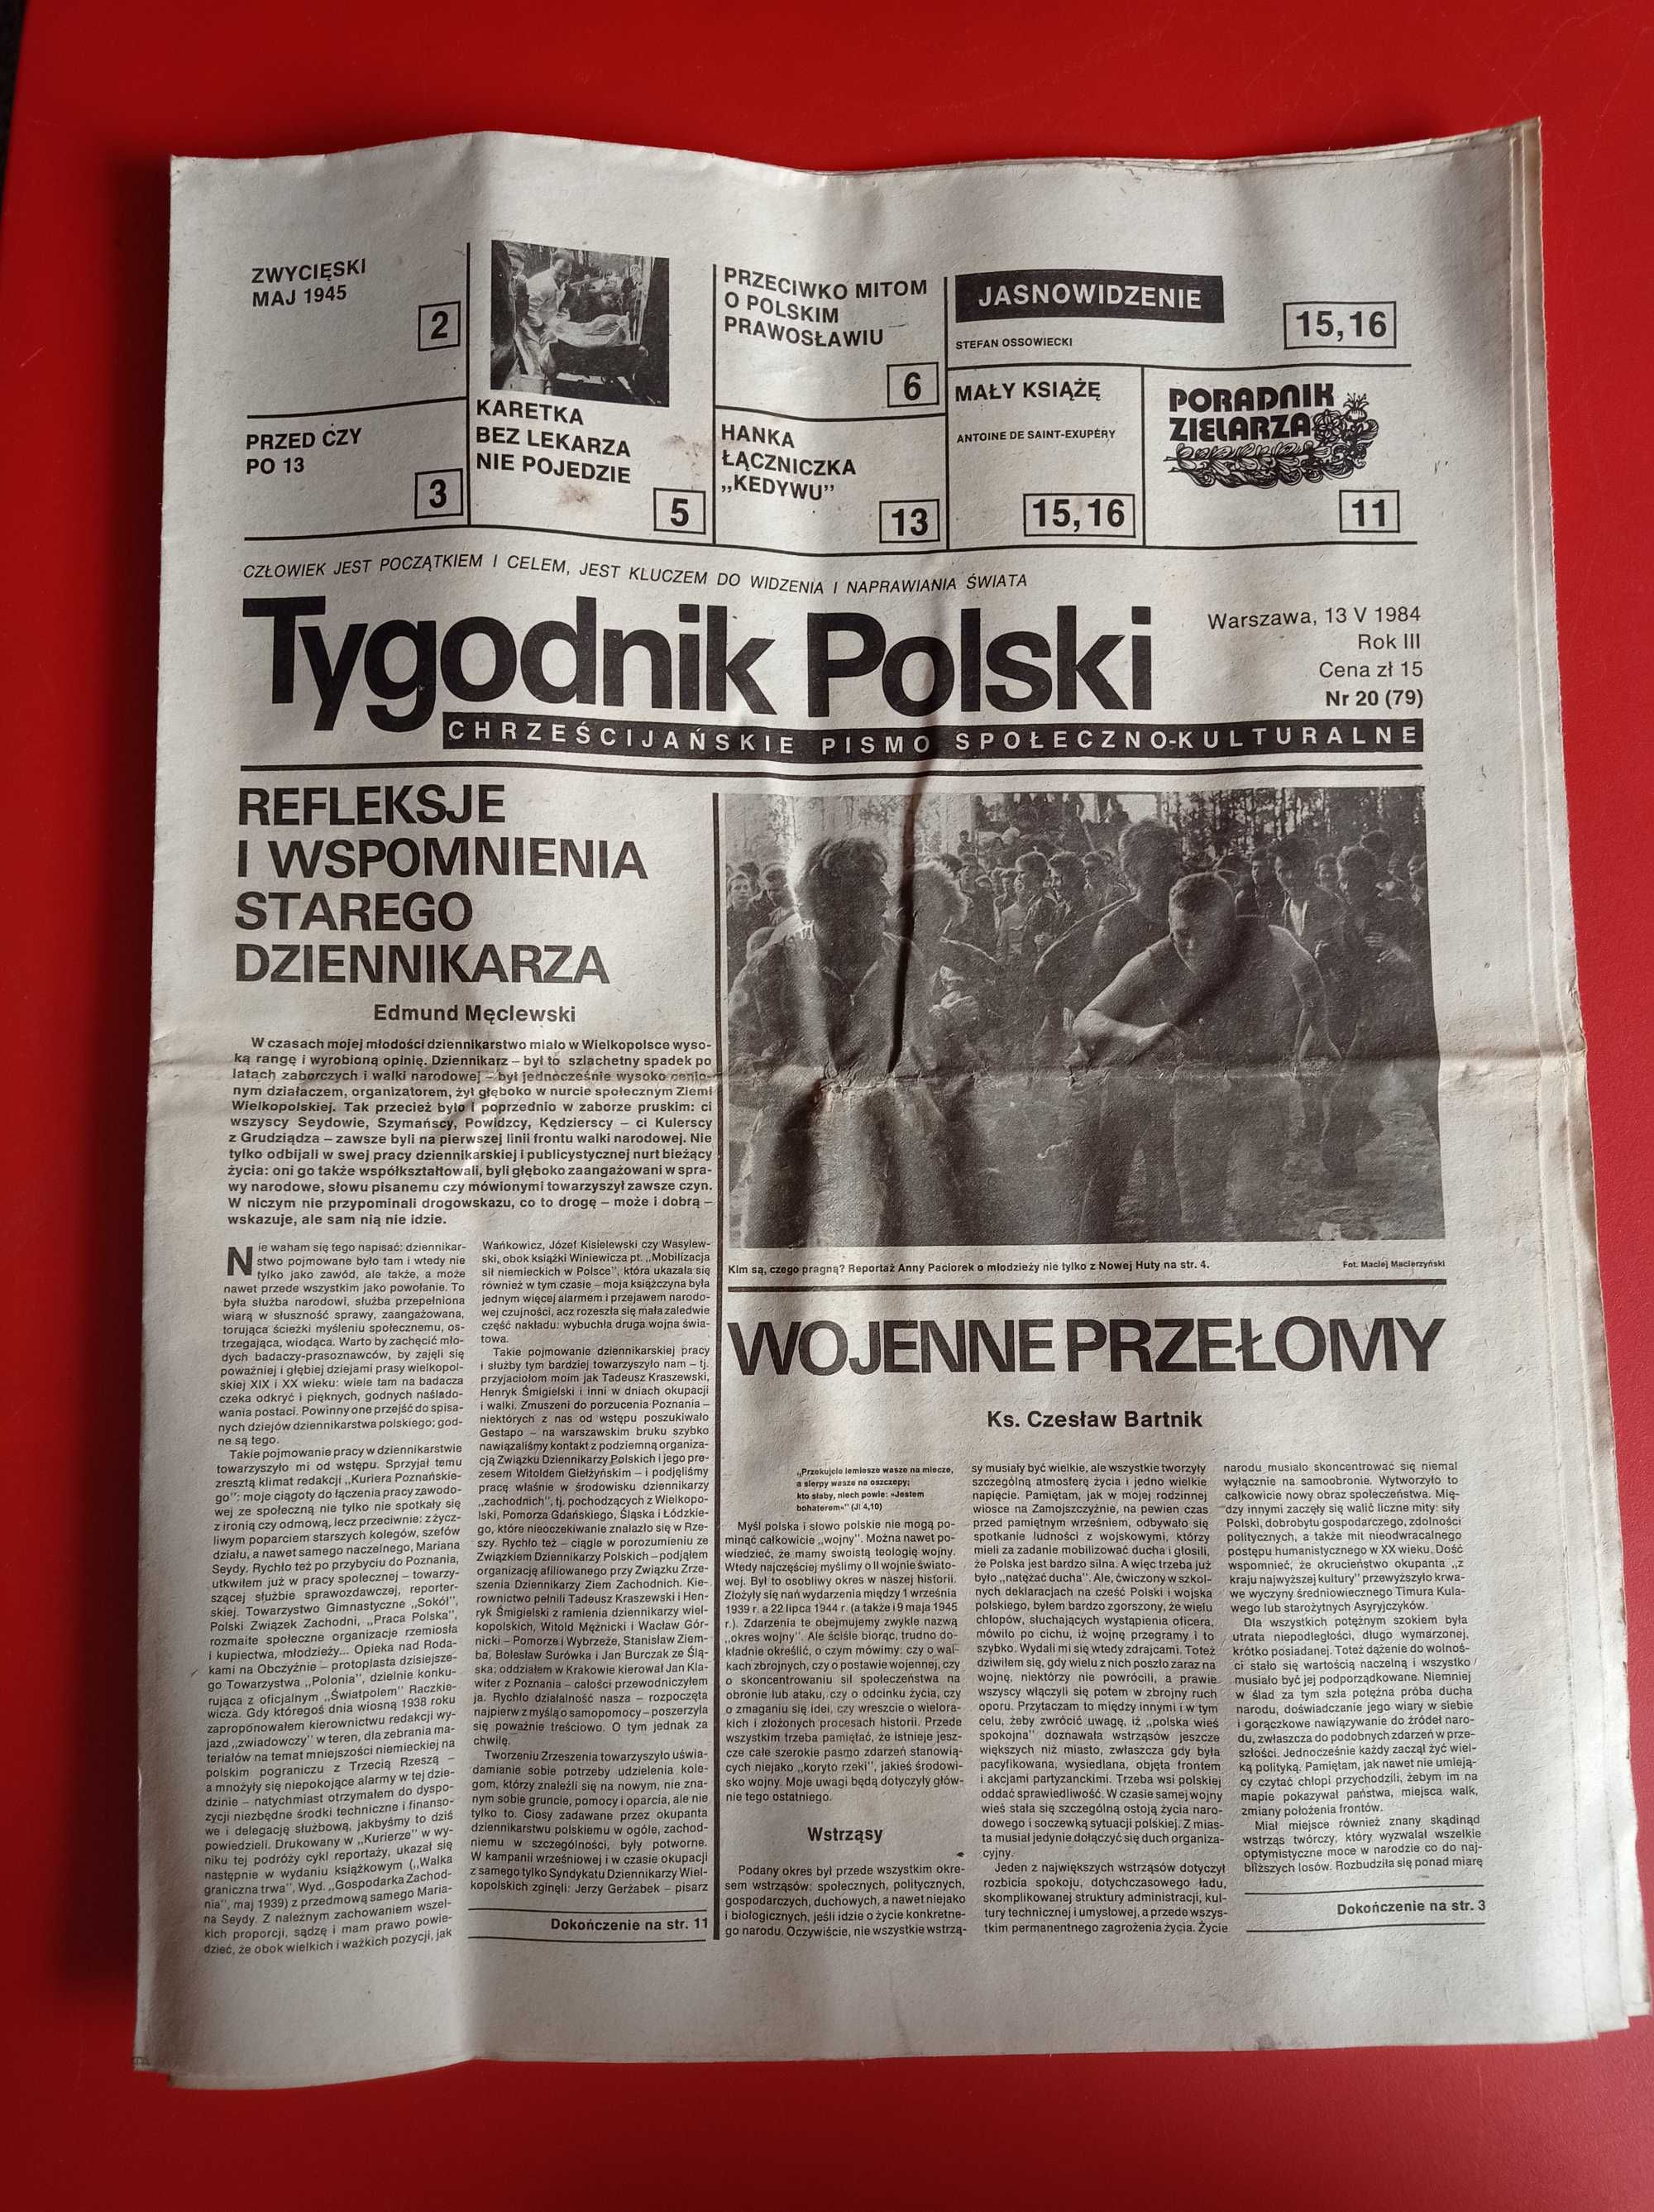 Tygodnik Polski, nr 20/1984, 13 maja 1984